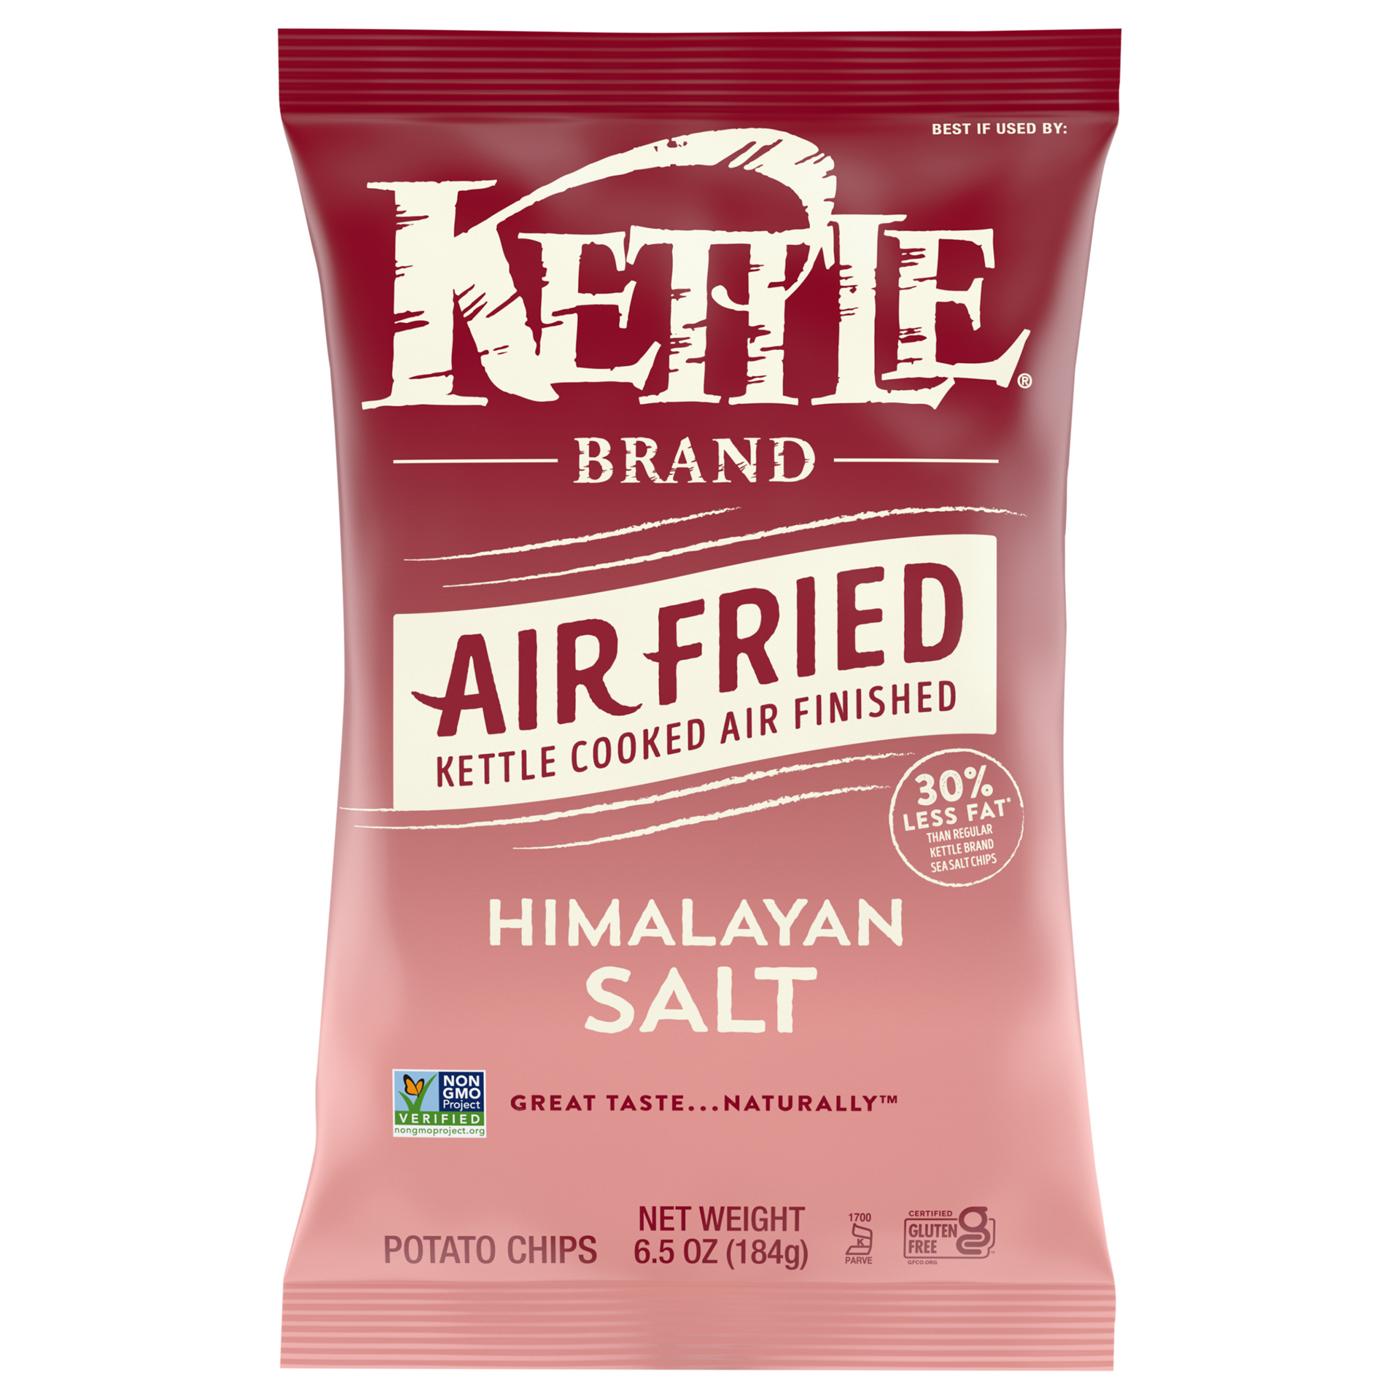 Kettle Brand Air Fried Himalayan Salt Potato Chips; image 1 of 3